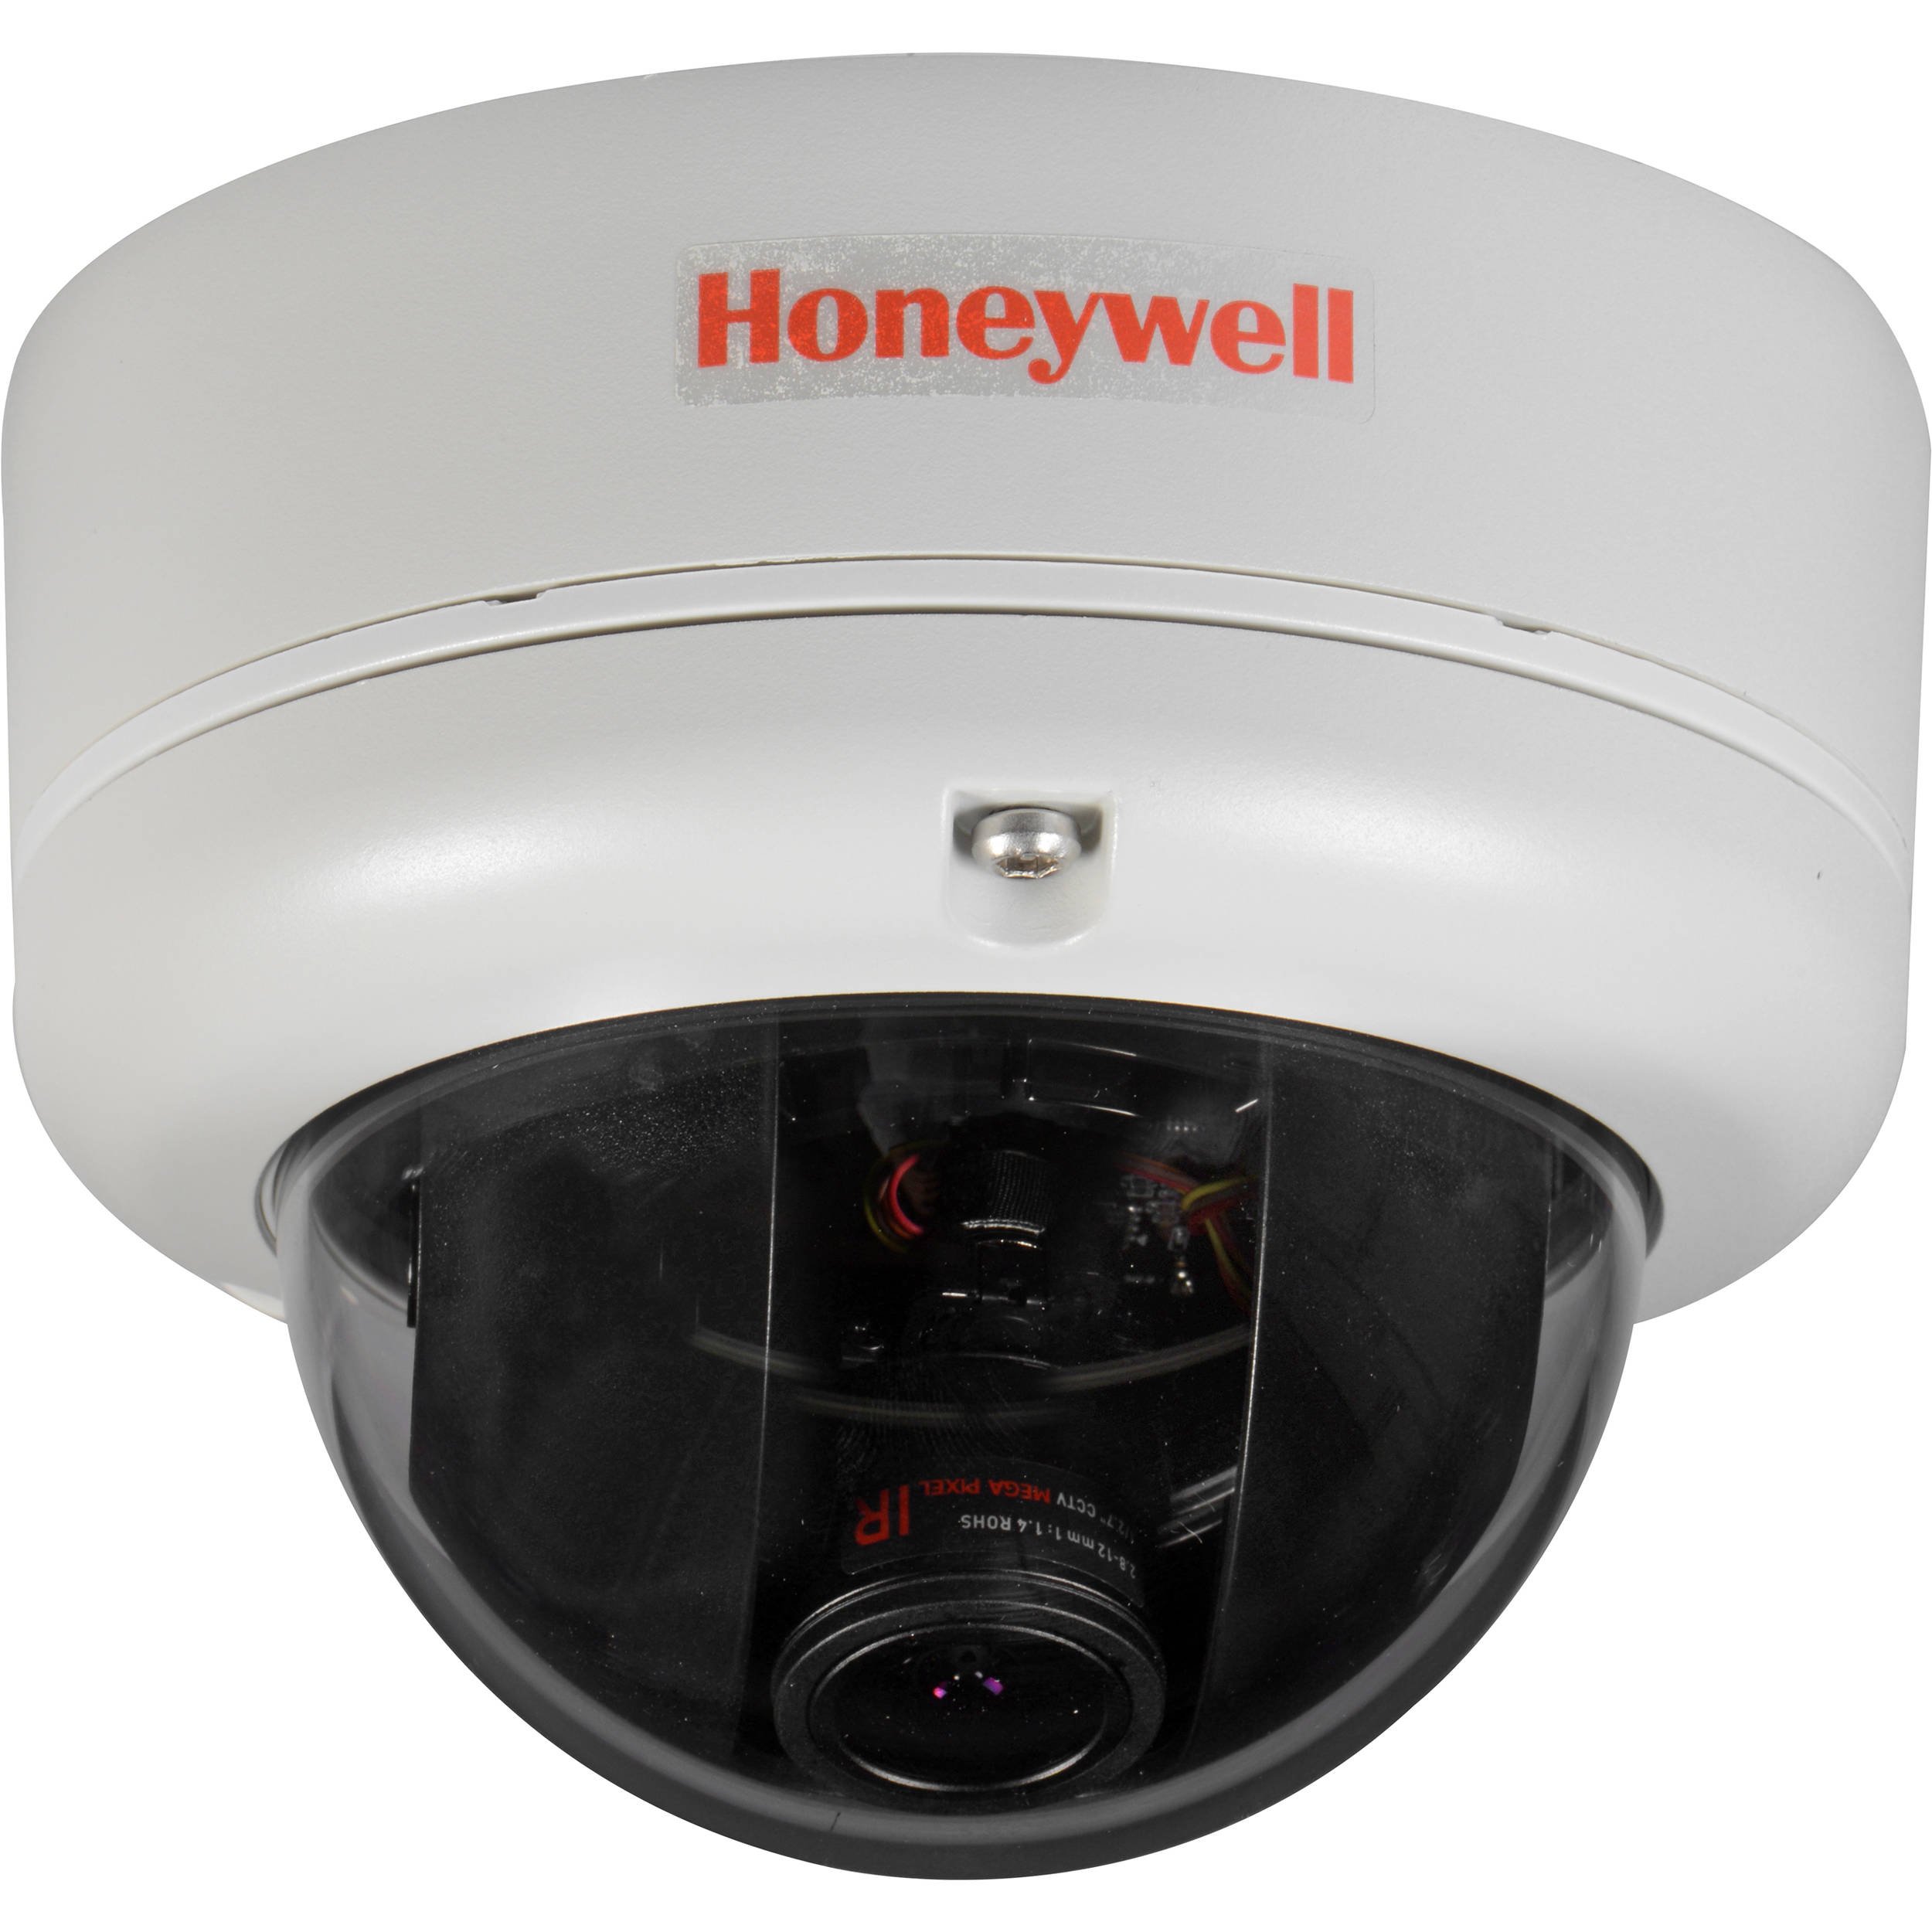 honeywell dome camera